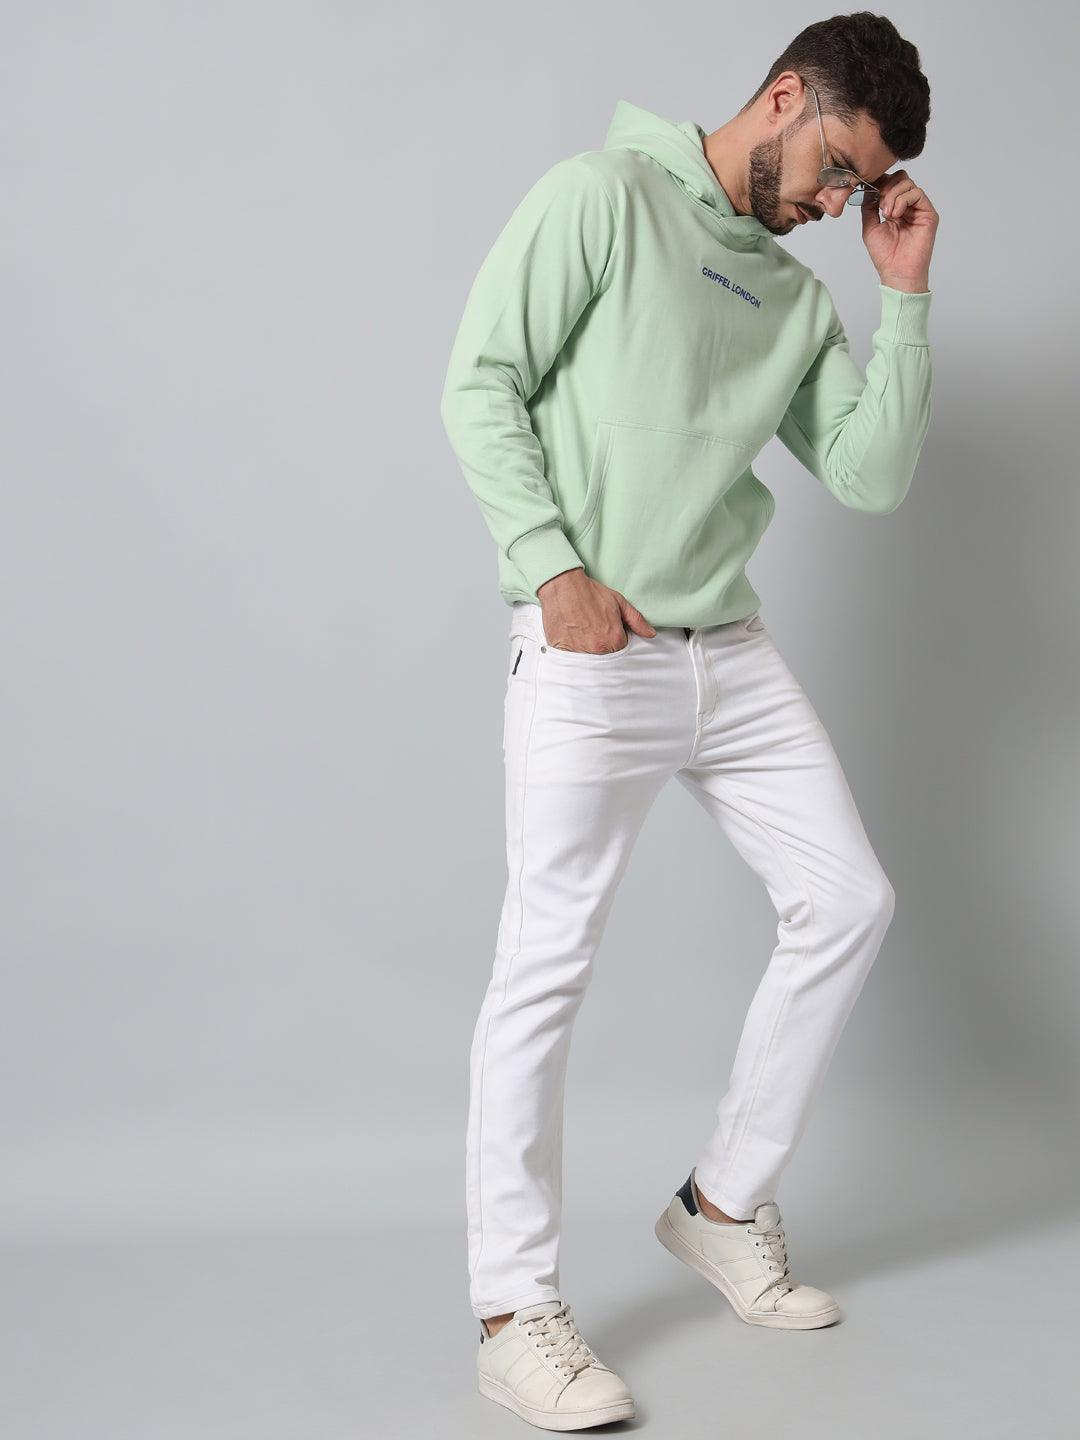 Griffel Men's Sea Green Cotton Front Logo Fleece Hoody Sweatshirt with Full Sleeve - griffel